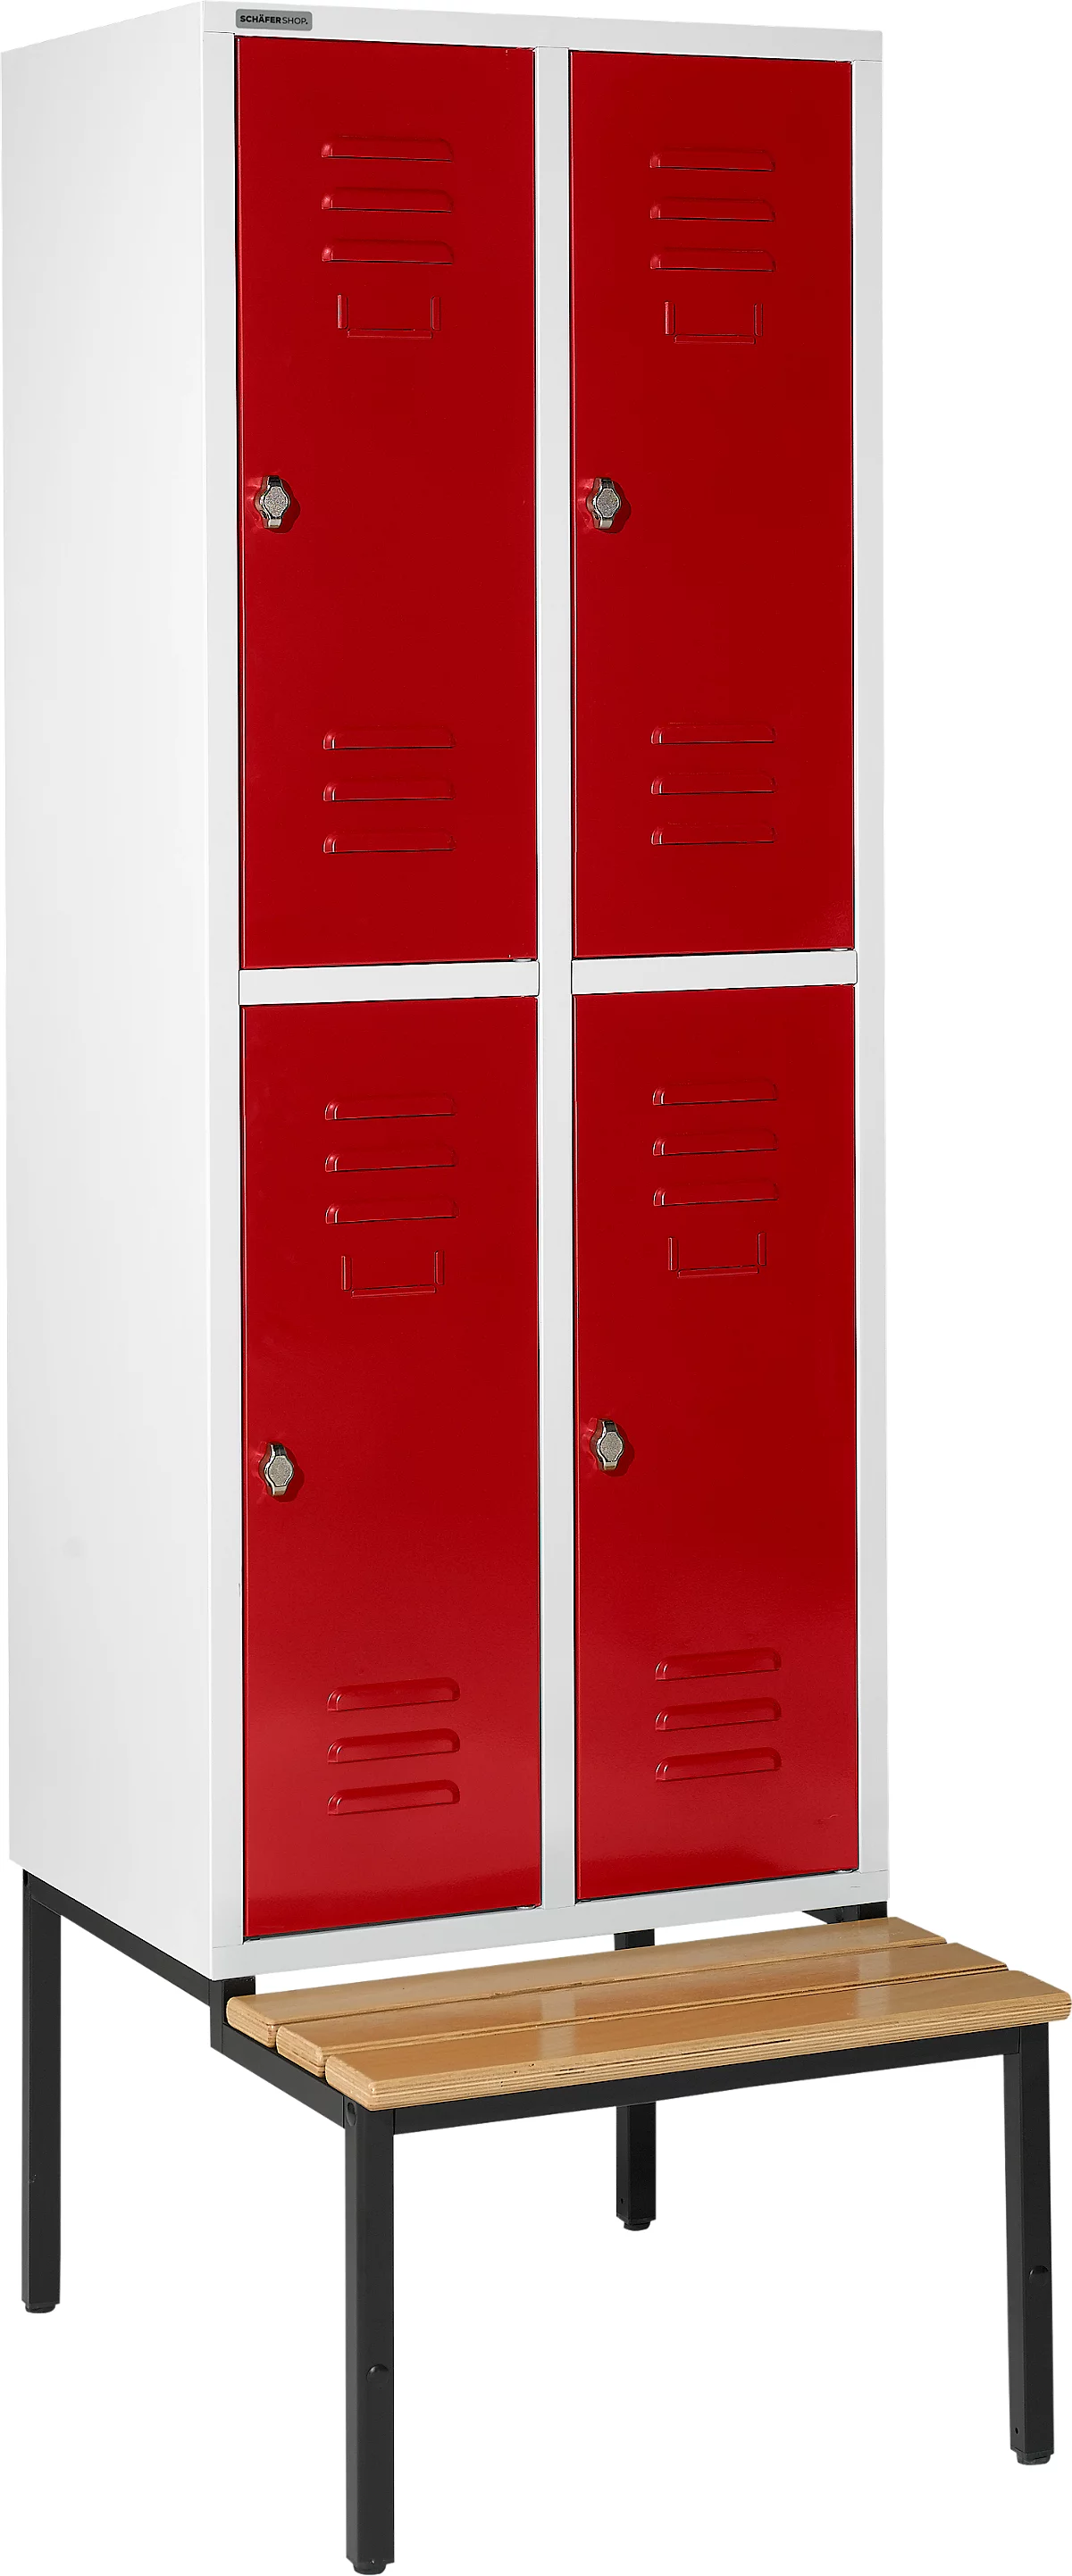 Schäfer Shop Select Taquilla, con banco, 2x2 compartimentos, 400 mm, cierre de pasador giratorio, gris luminoso/rojo rubí